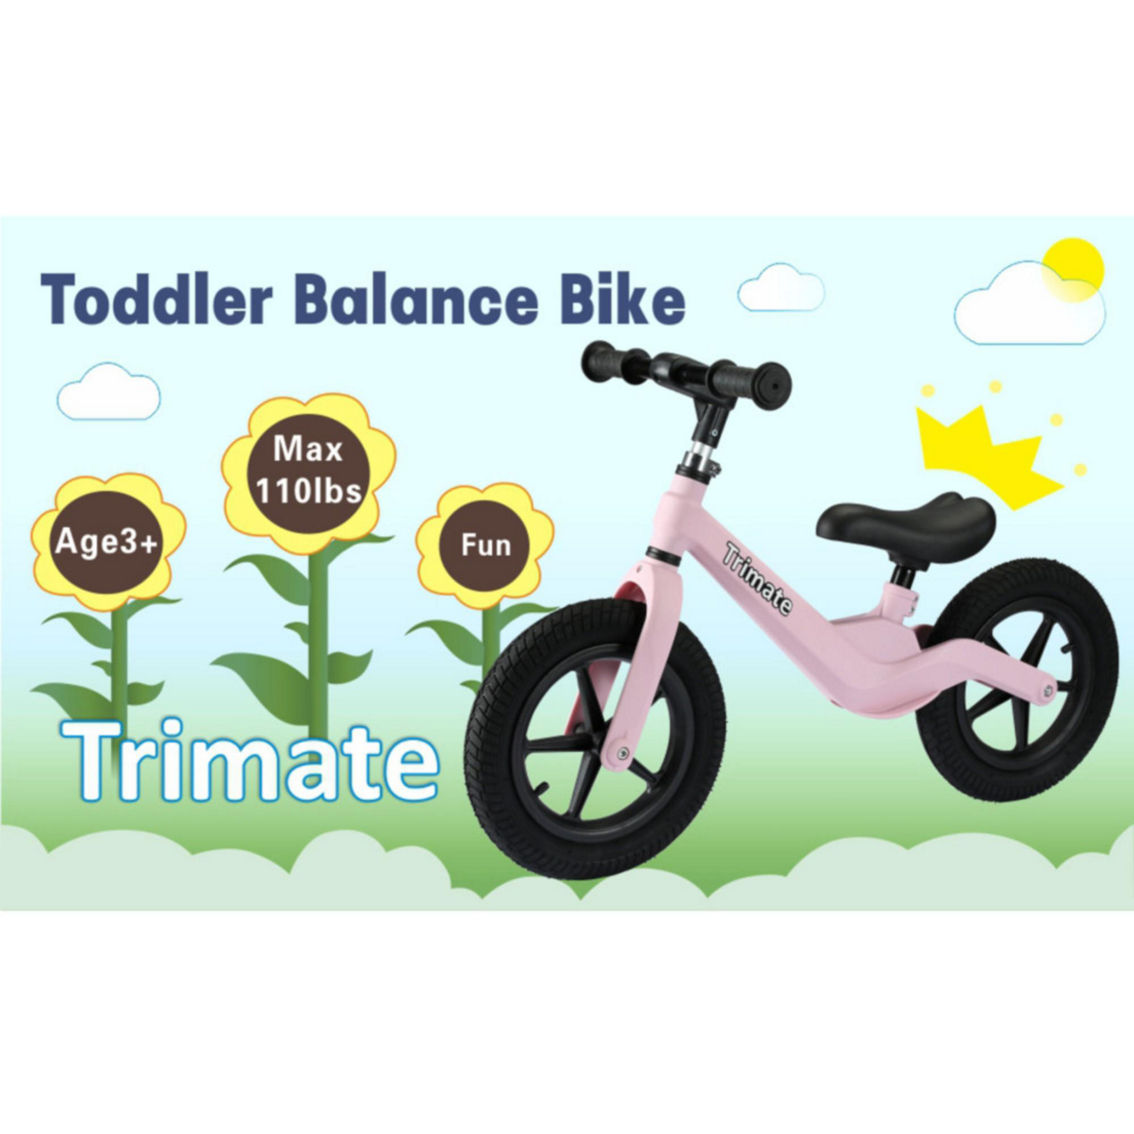 Trimate Balance Bike - Image 4 of 9